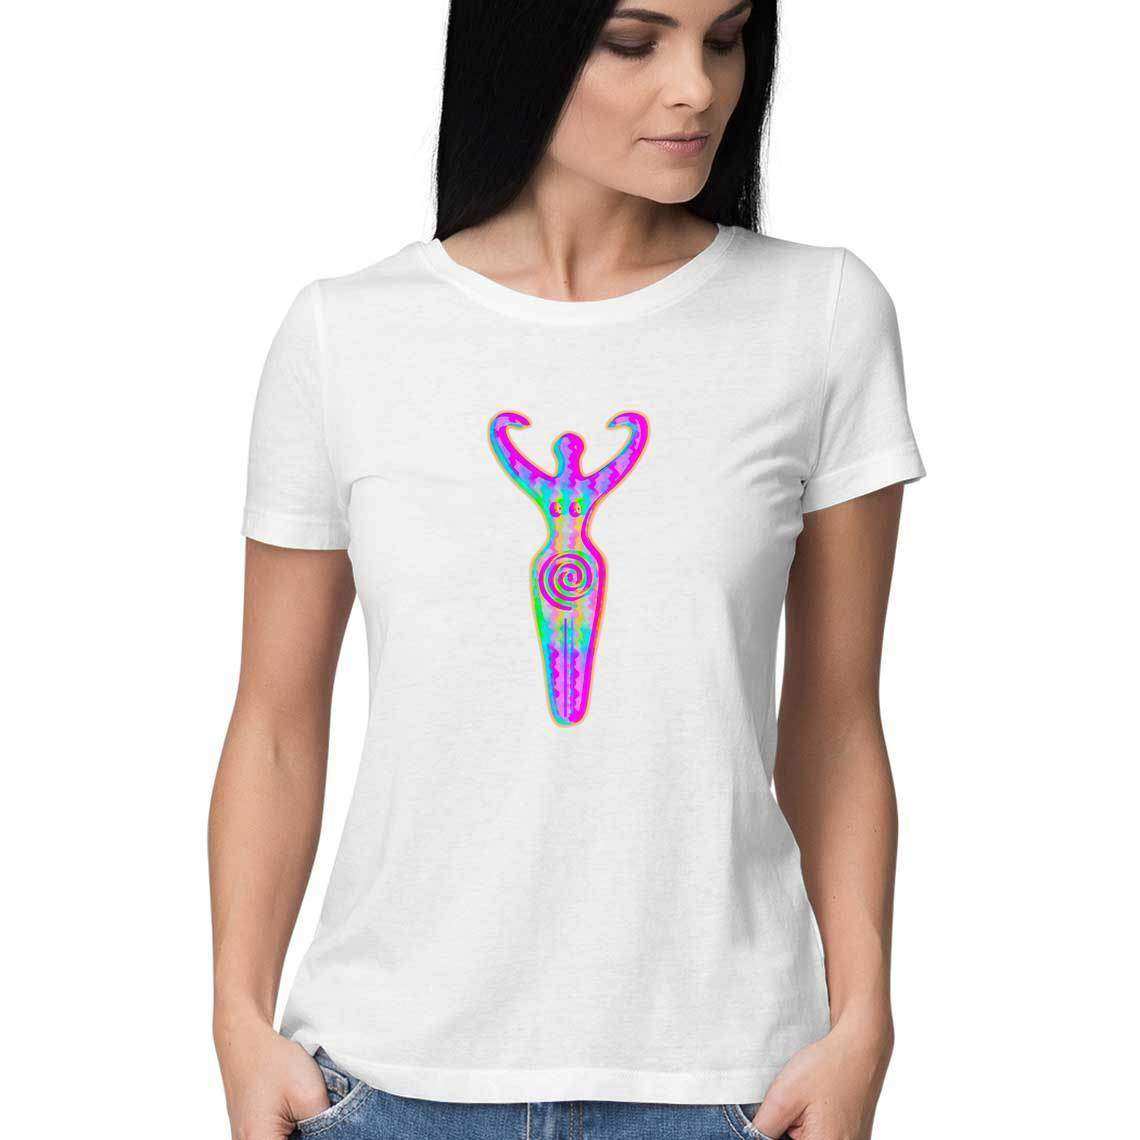 The Spiral Goddess Women's T-Shirt - CBD Store India